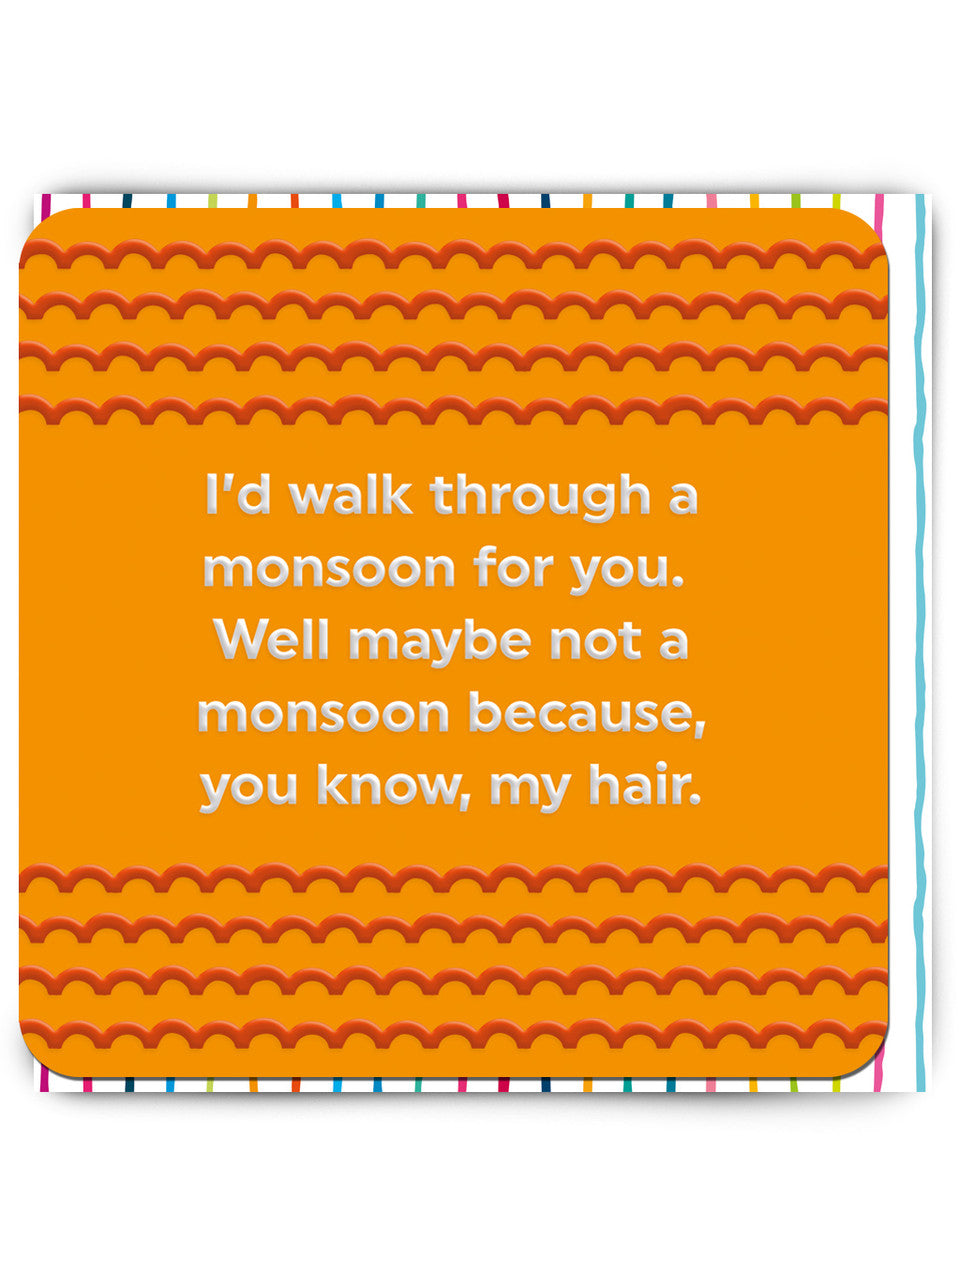 Monsoon Hair - funny greeting card